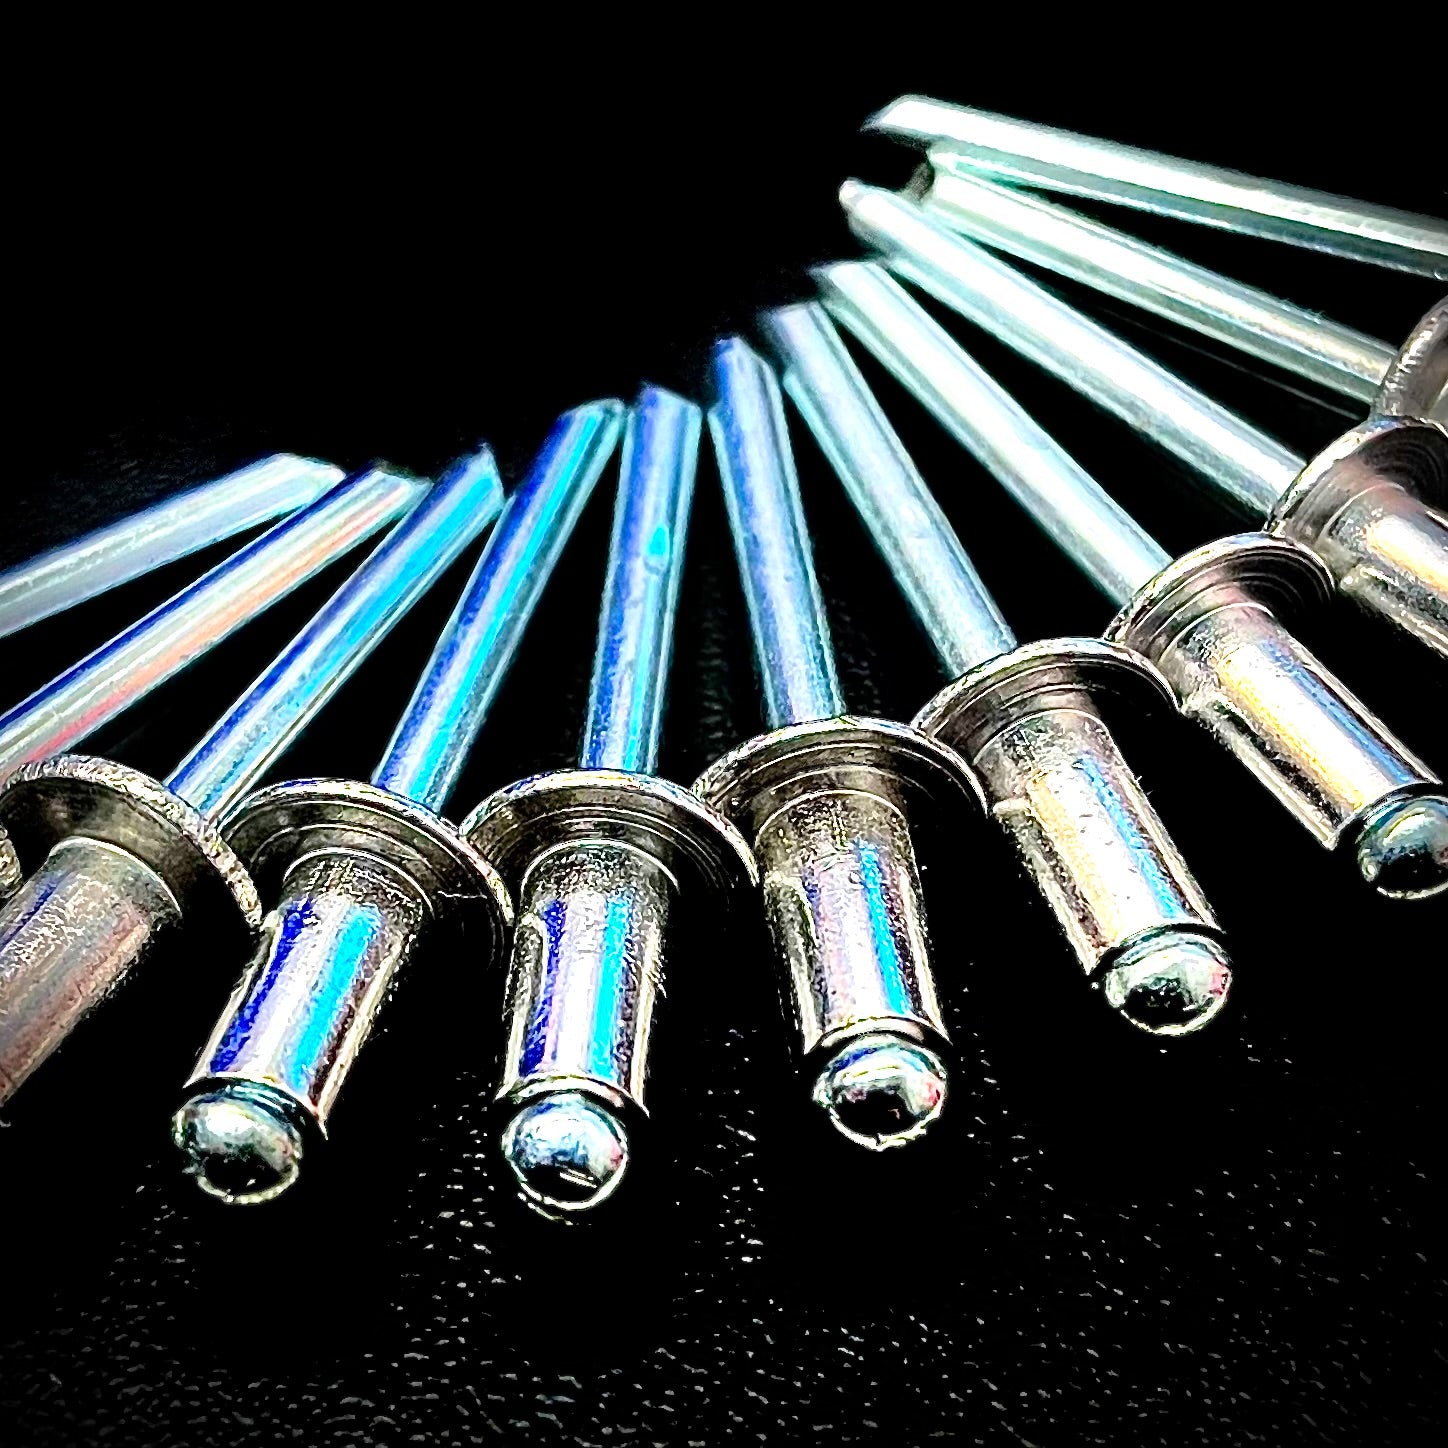 3mm Pop Rivets Domed Aluminium/ Steel ISO 15983A - Fixaball Ltd. Fixings and Fasteners UK